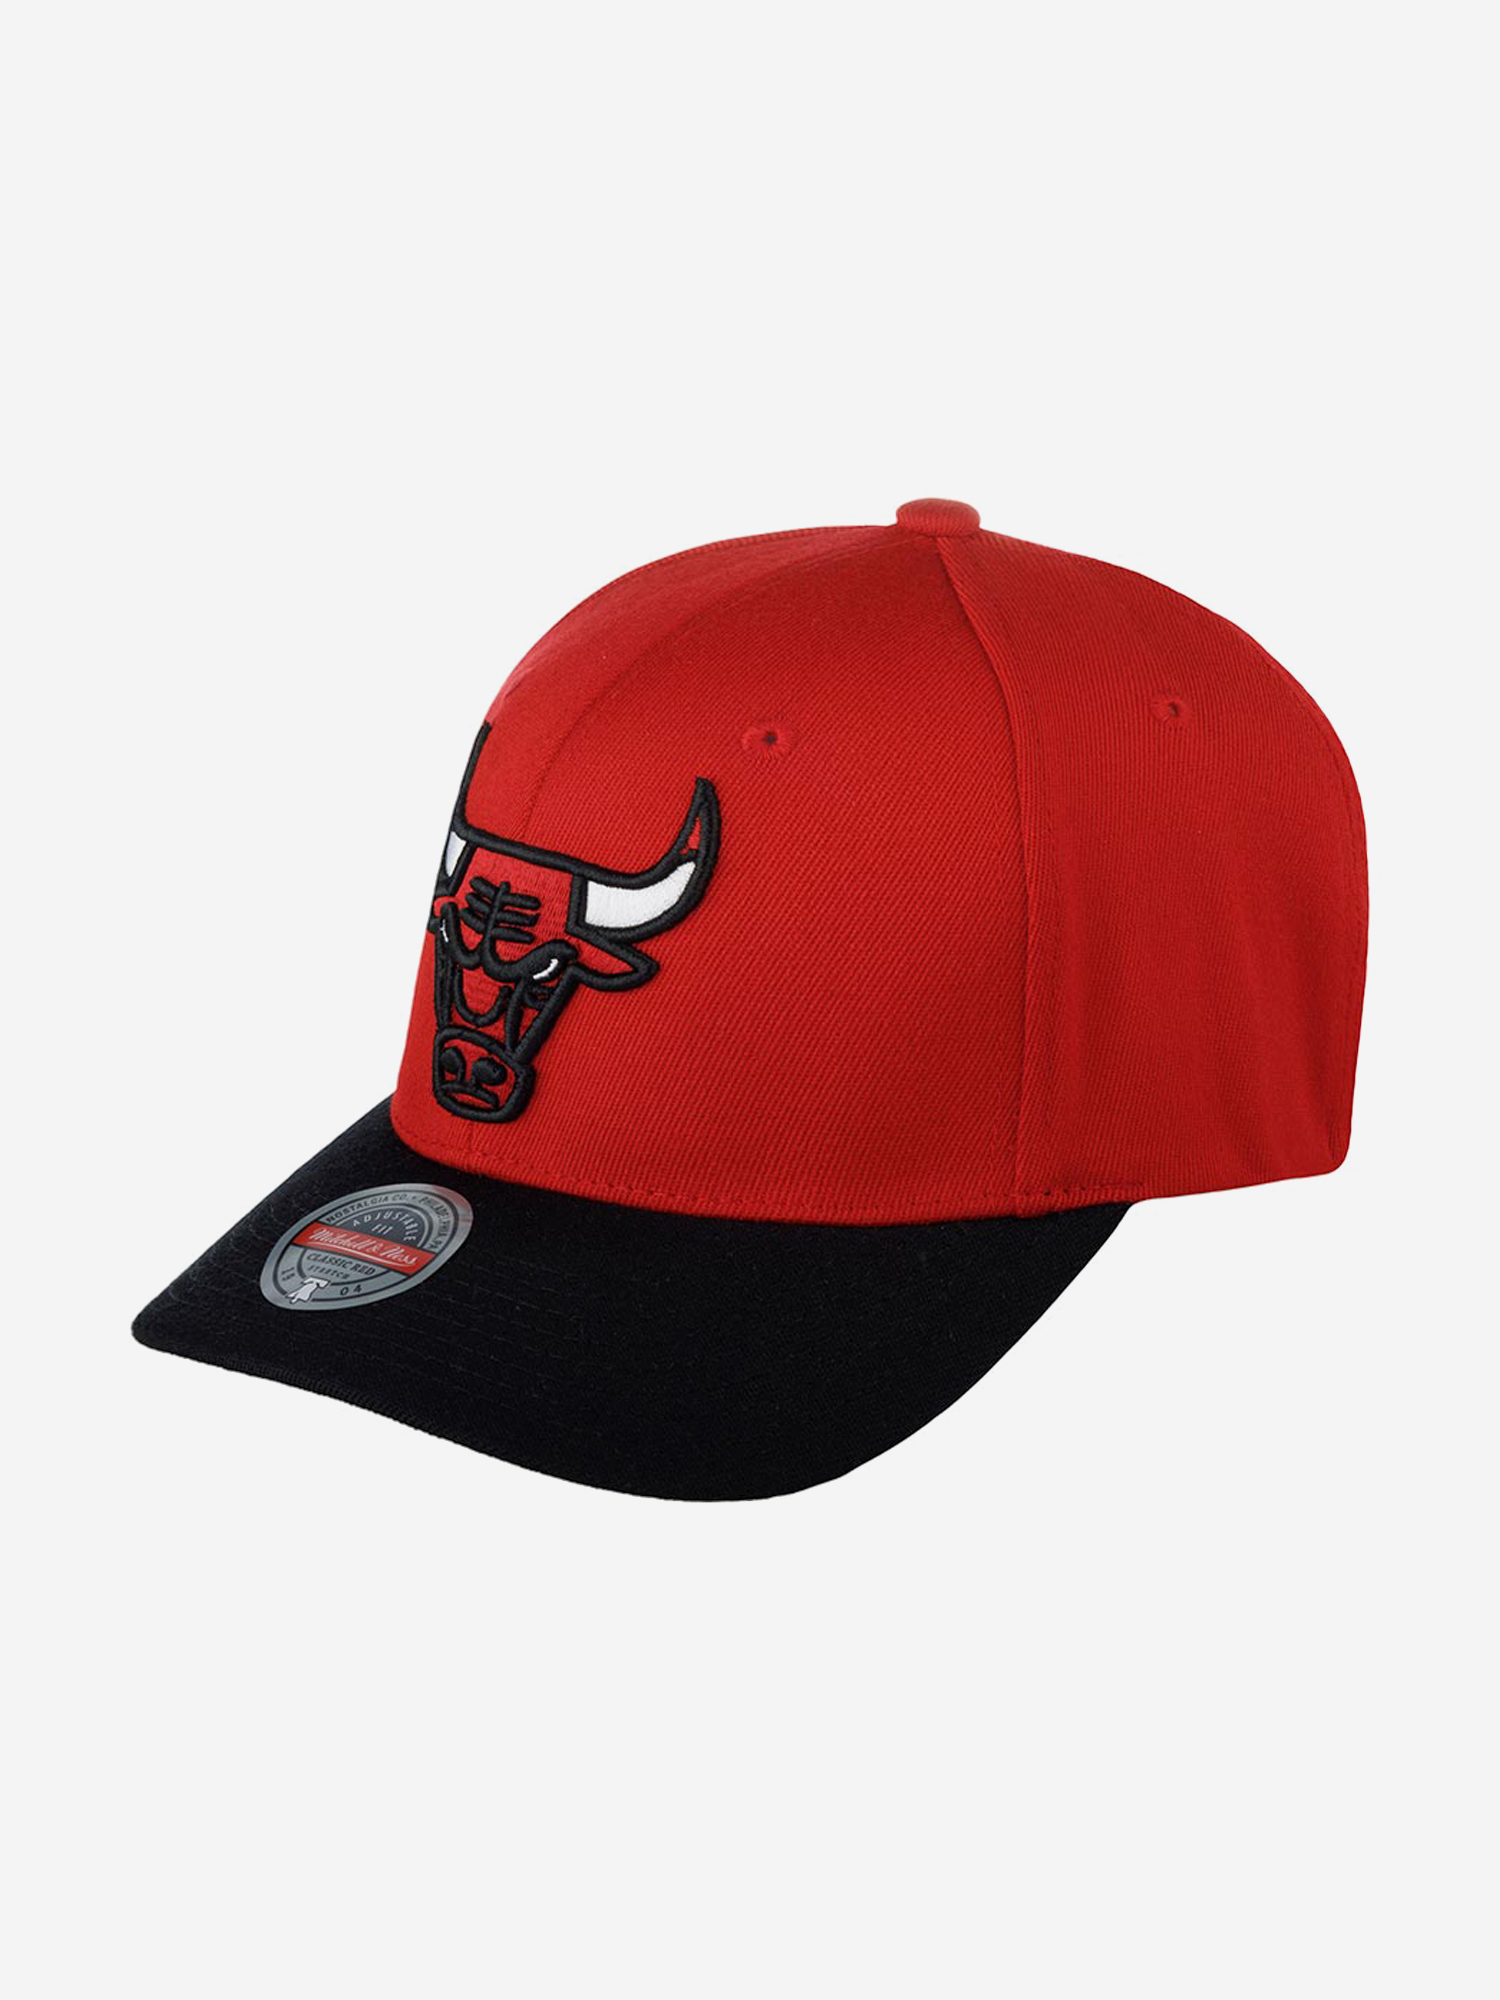 Бейсболка MITCHELL NESS HHSS3265-CBUYYPPPRDBK Chicago Bulls NBA (красный), Красный бейсболка mitchell ness hhss3257 cbuyypppred1 chicago bulls nba красный красный